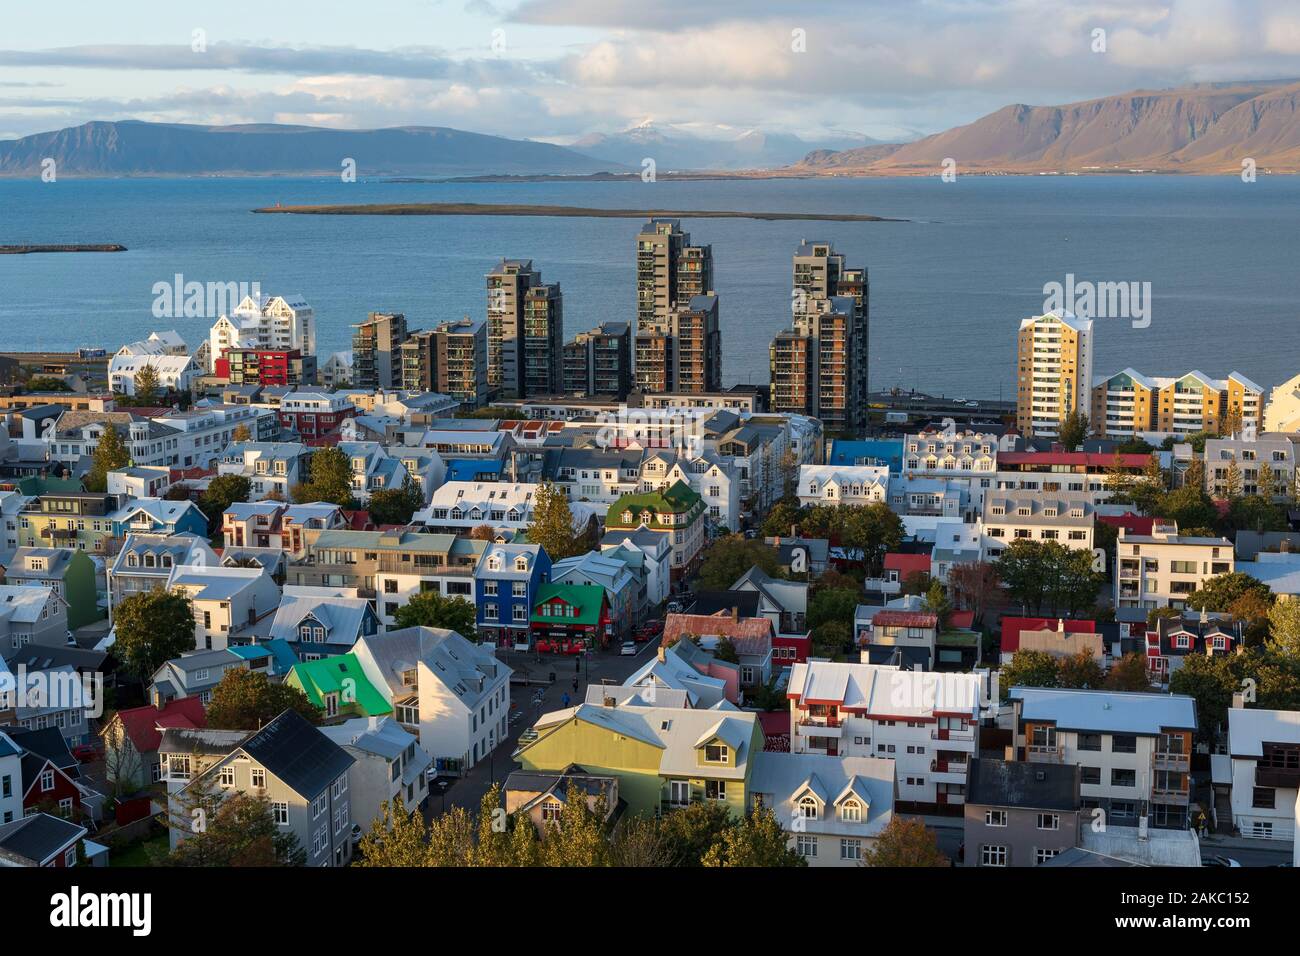 Iceland, Capital Region, Reykjavik, Reykjavik from the bell tower of Hallgrimskirkja Stock Photo